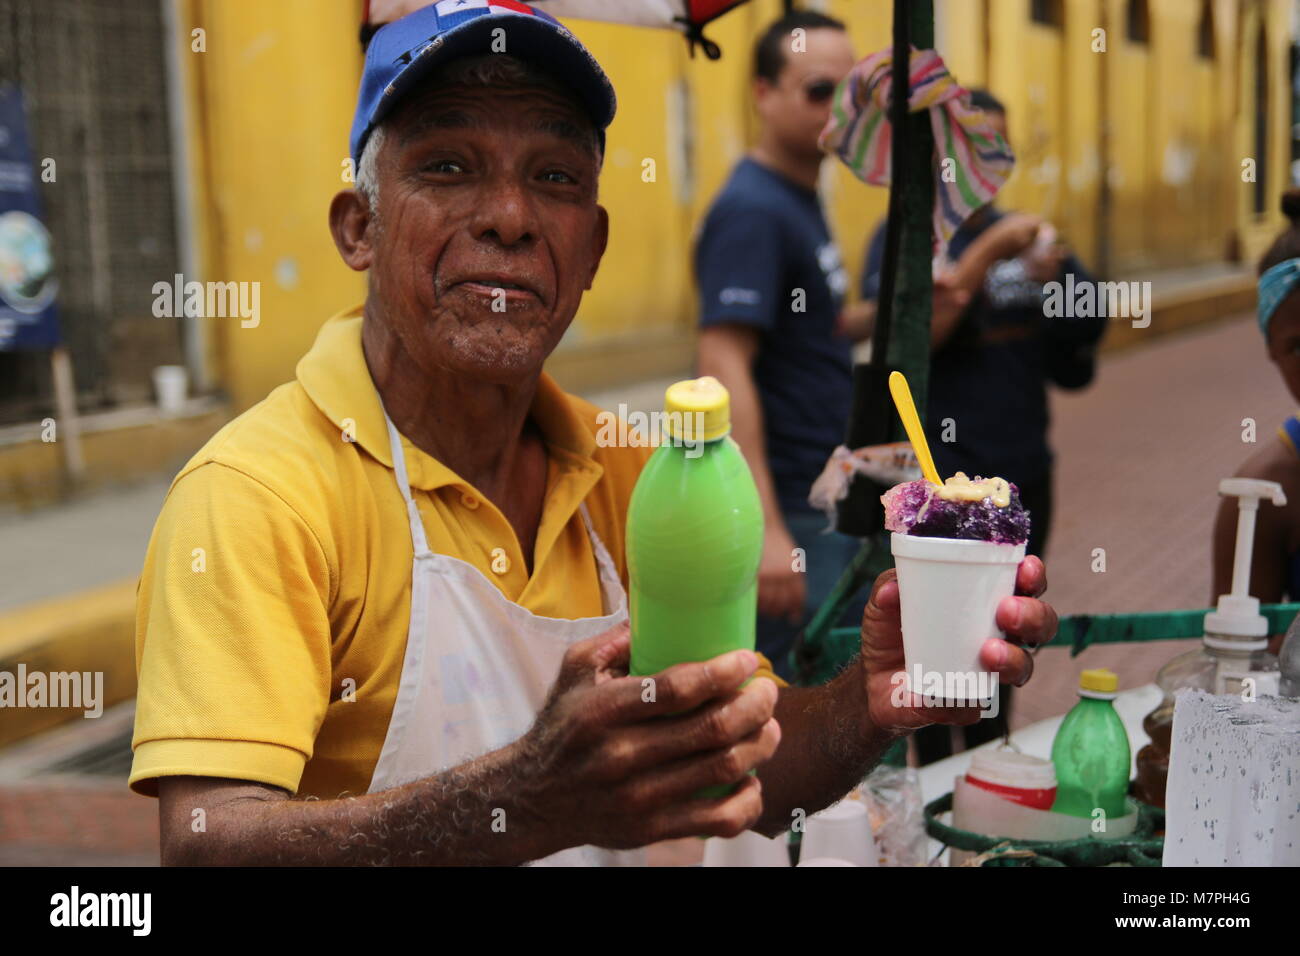 Local slush seller portrait in Panama City old town. Stock Photo